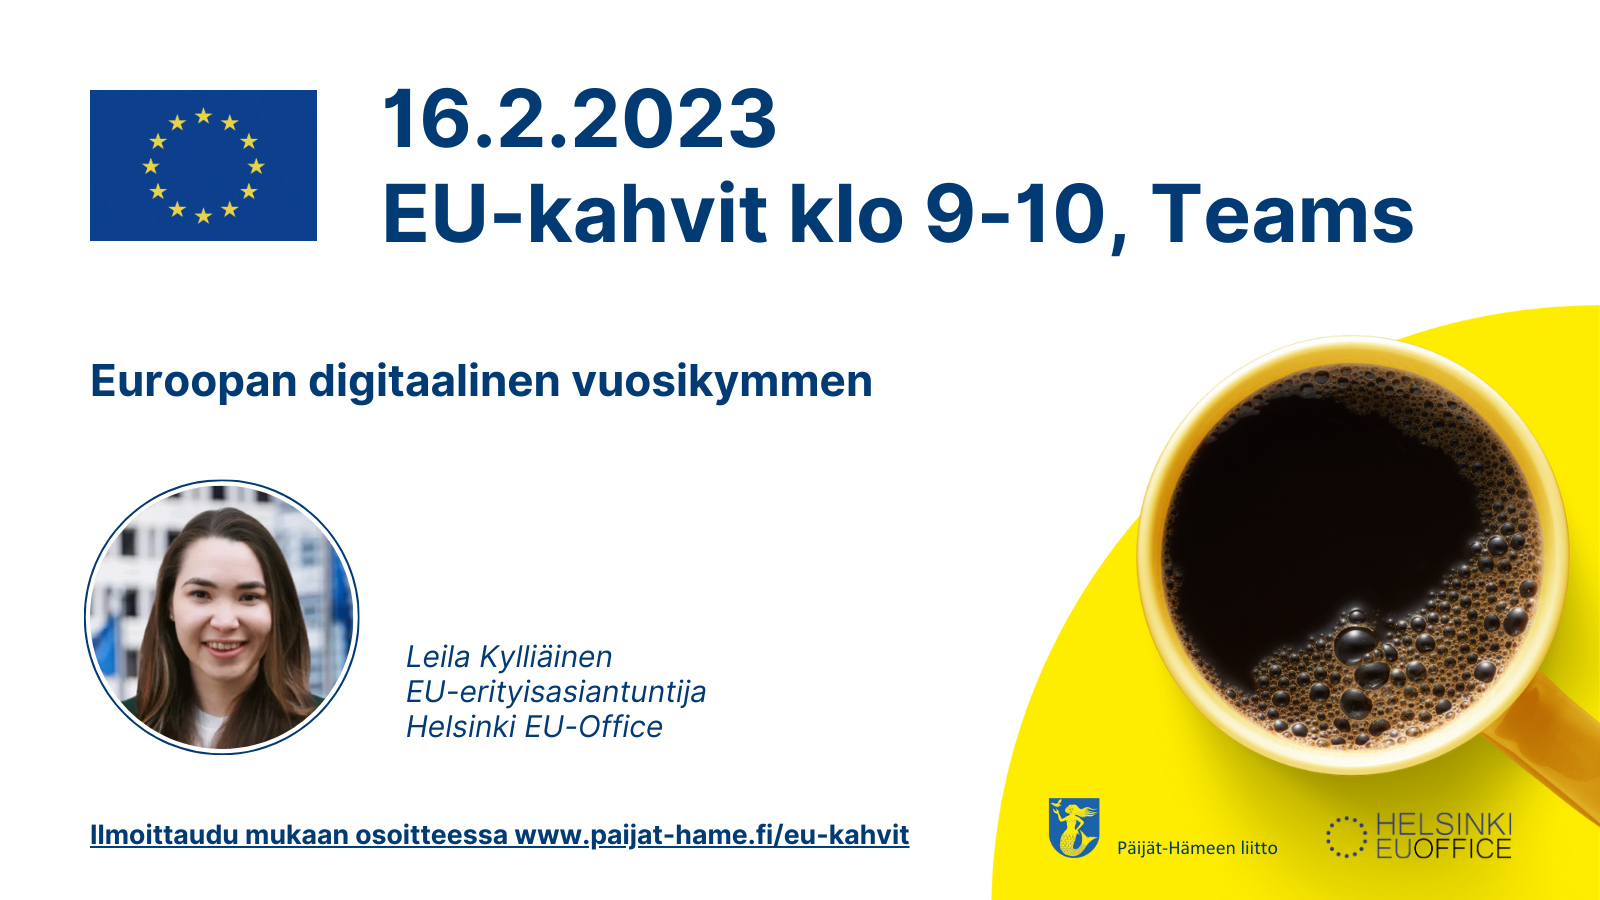 EU-kahvit 16.2.2023 klo 9-10, Teams